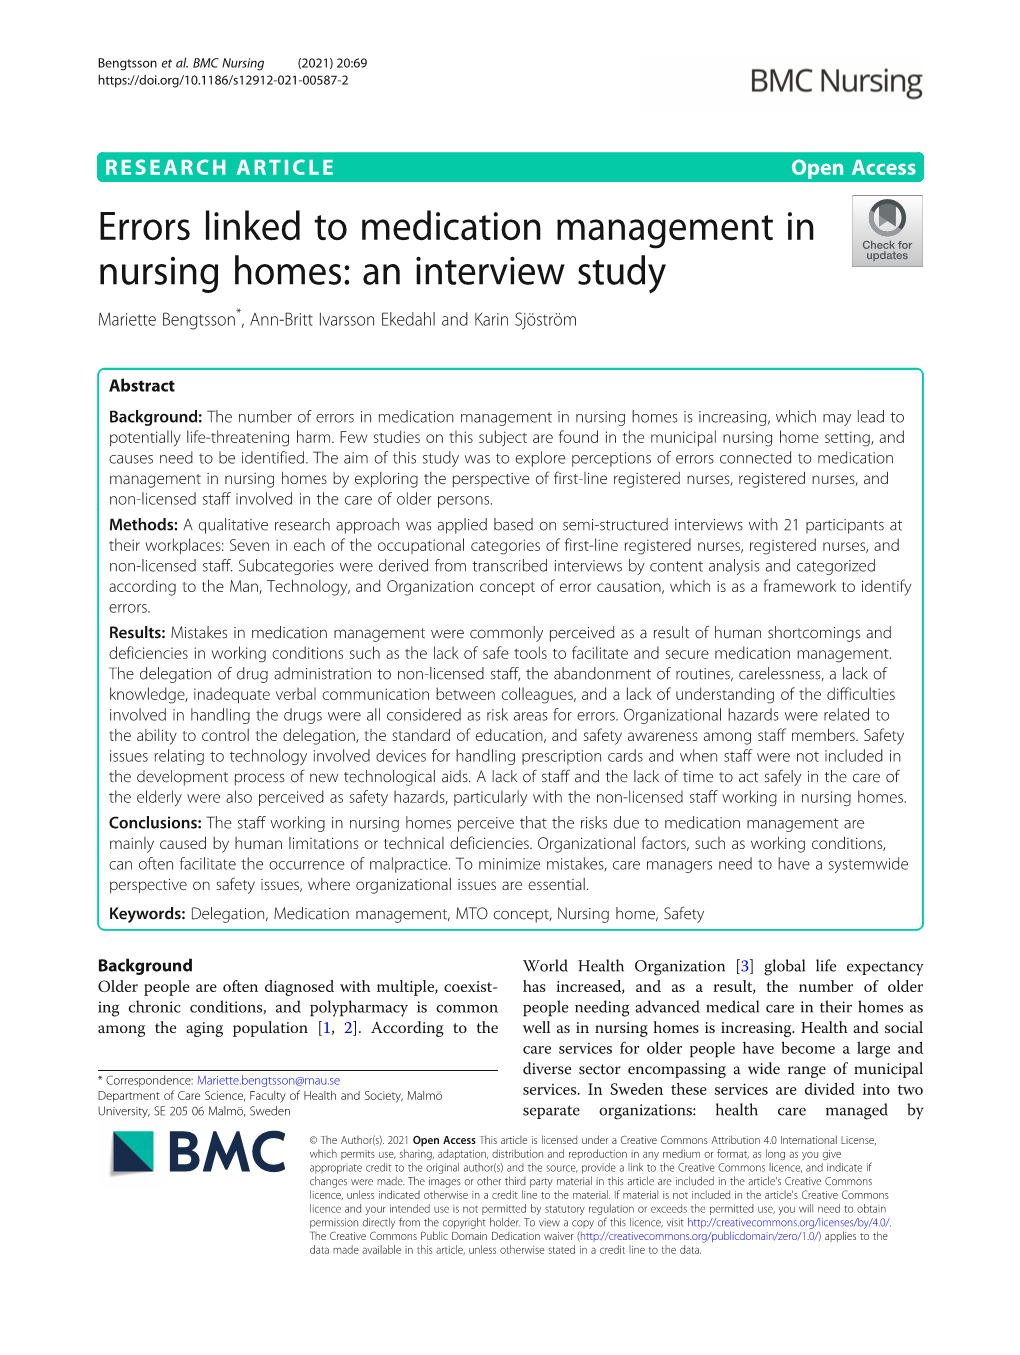 Errors Linked to Medication Management in Nursing Homes: an Interview Study Mariette Bengtsson*, Ann-Britt Ivarsson Ekedahl and Karin Sjöström